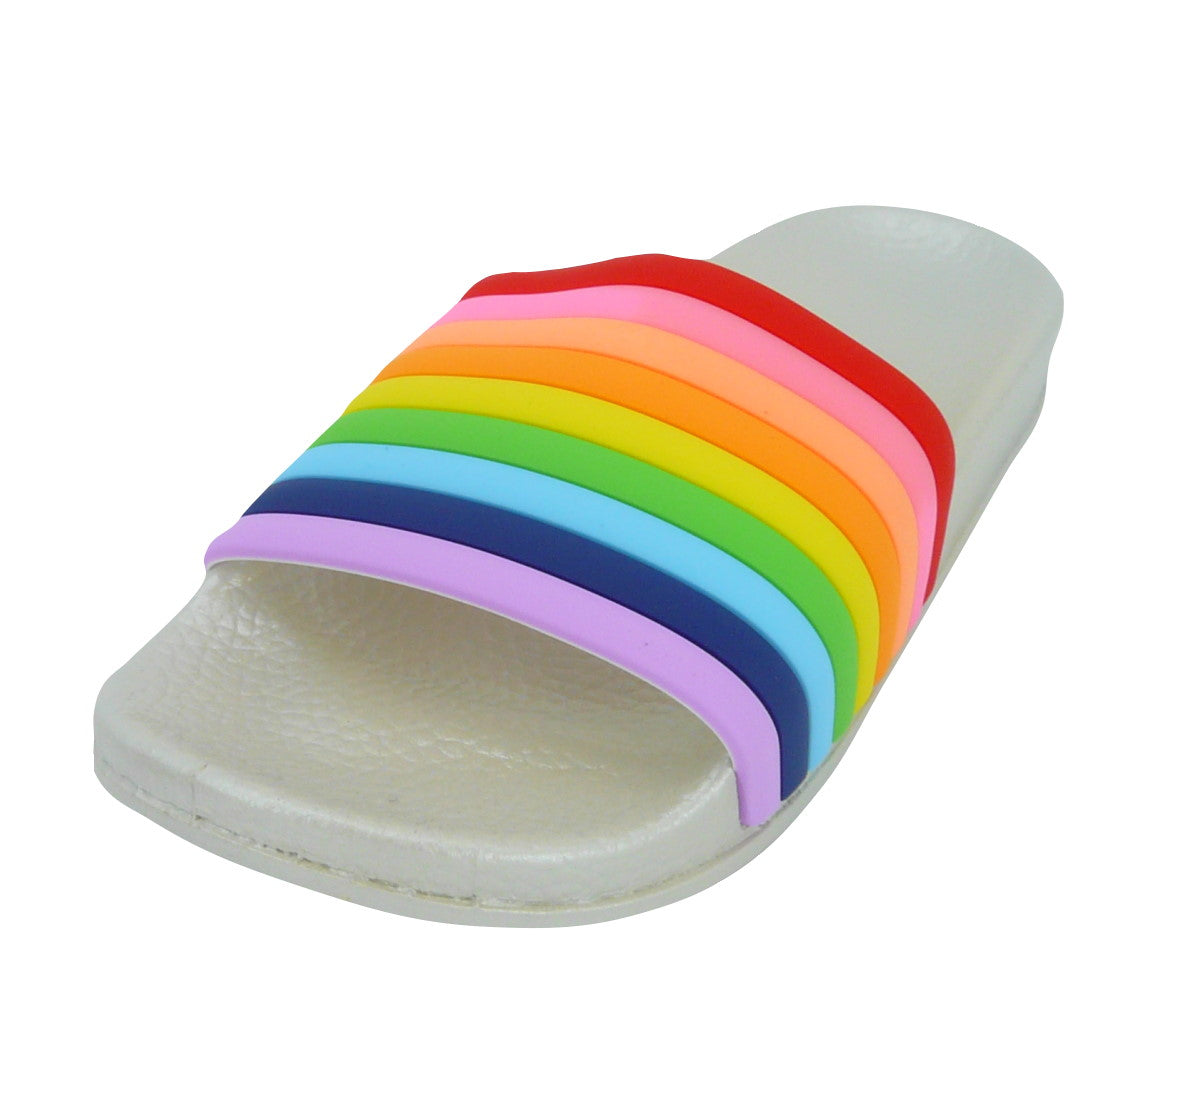 Girls Rainbow Striped Pool Sliders Beach Sandals Flip Flops